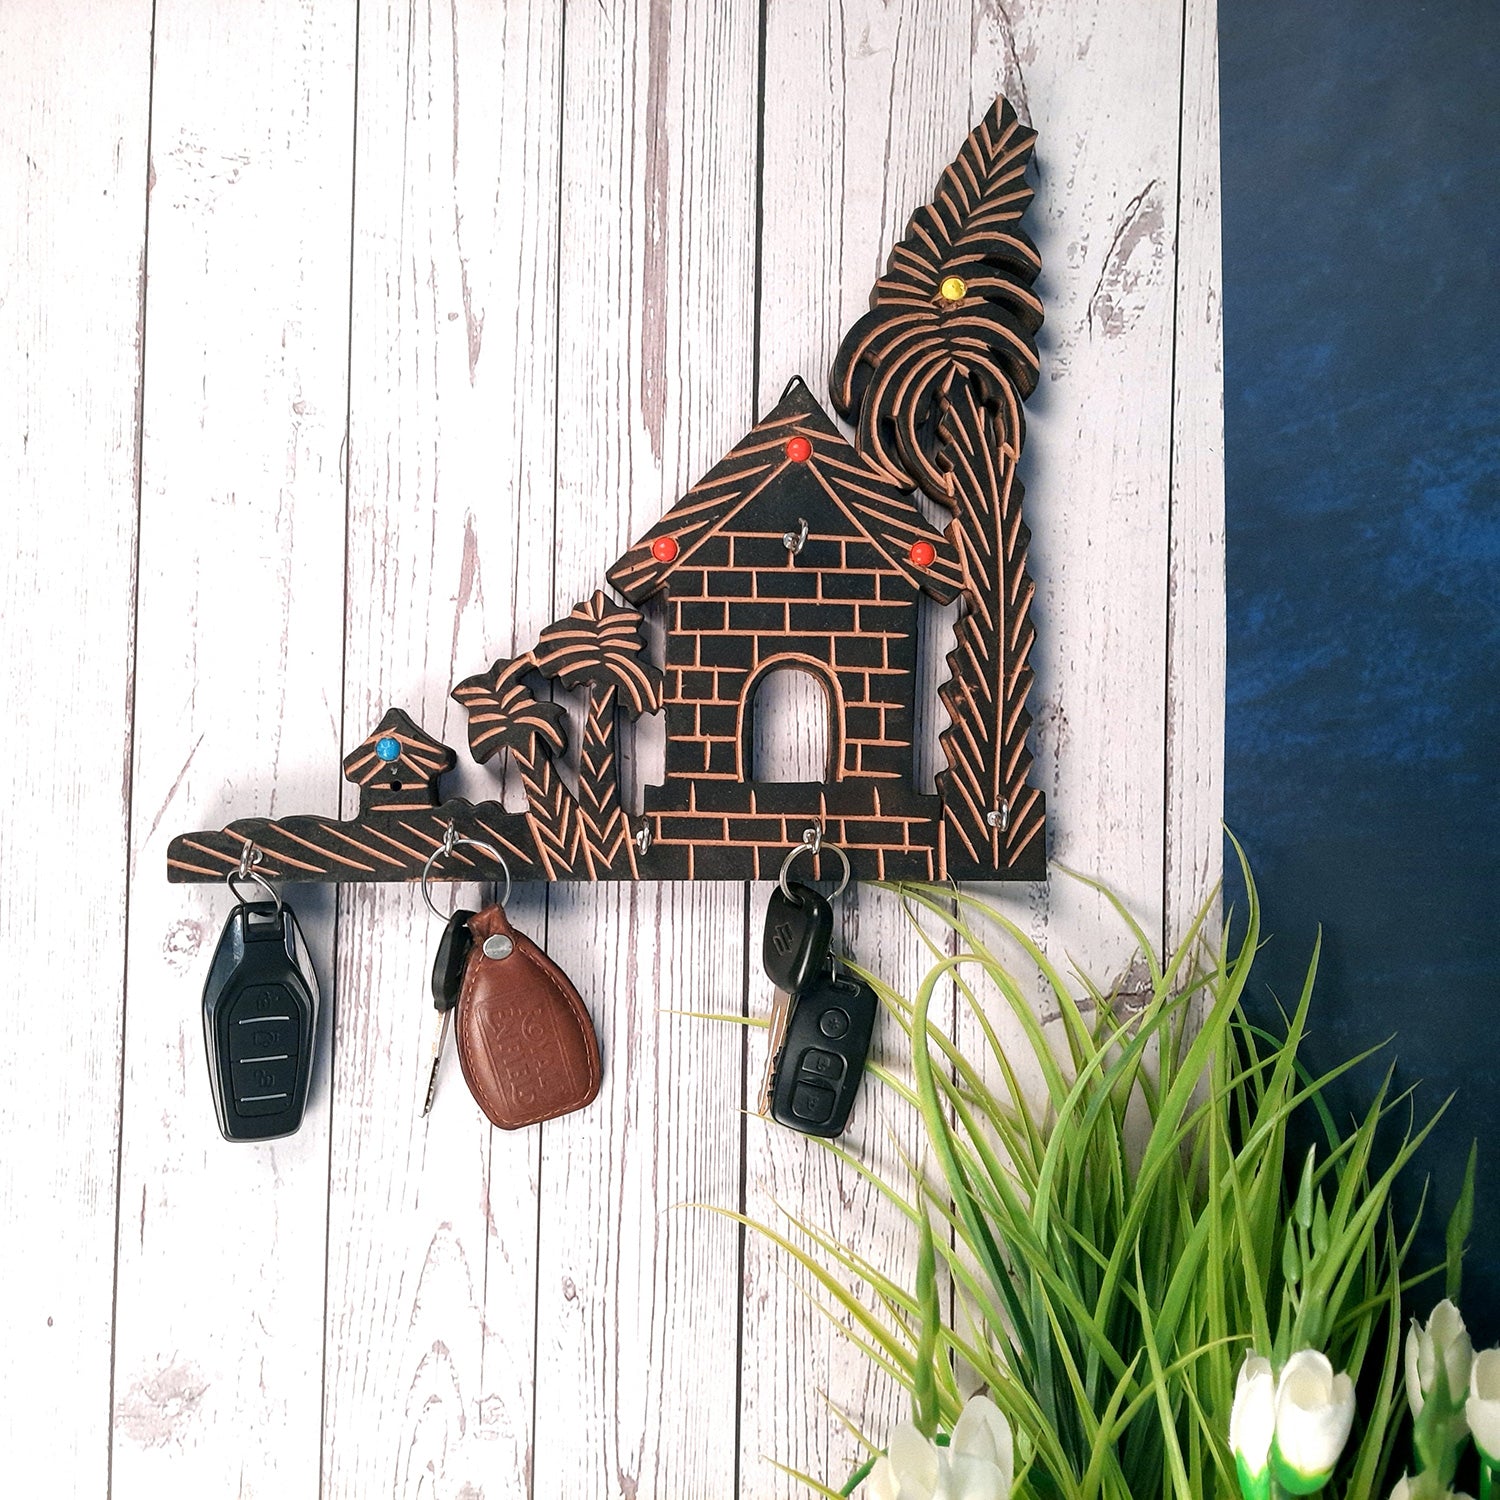 Key Holder Wall Hanging | Key Hook Stand - Hut Design | Wooden Keys Organizer - For Home, Entrance, Office Decor & Gifts -12 Inch (6 Hooks)